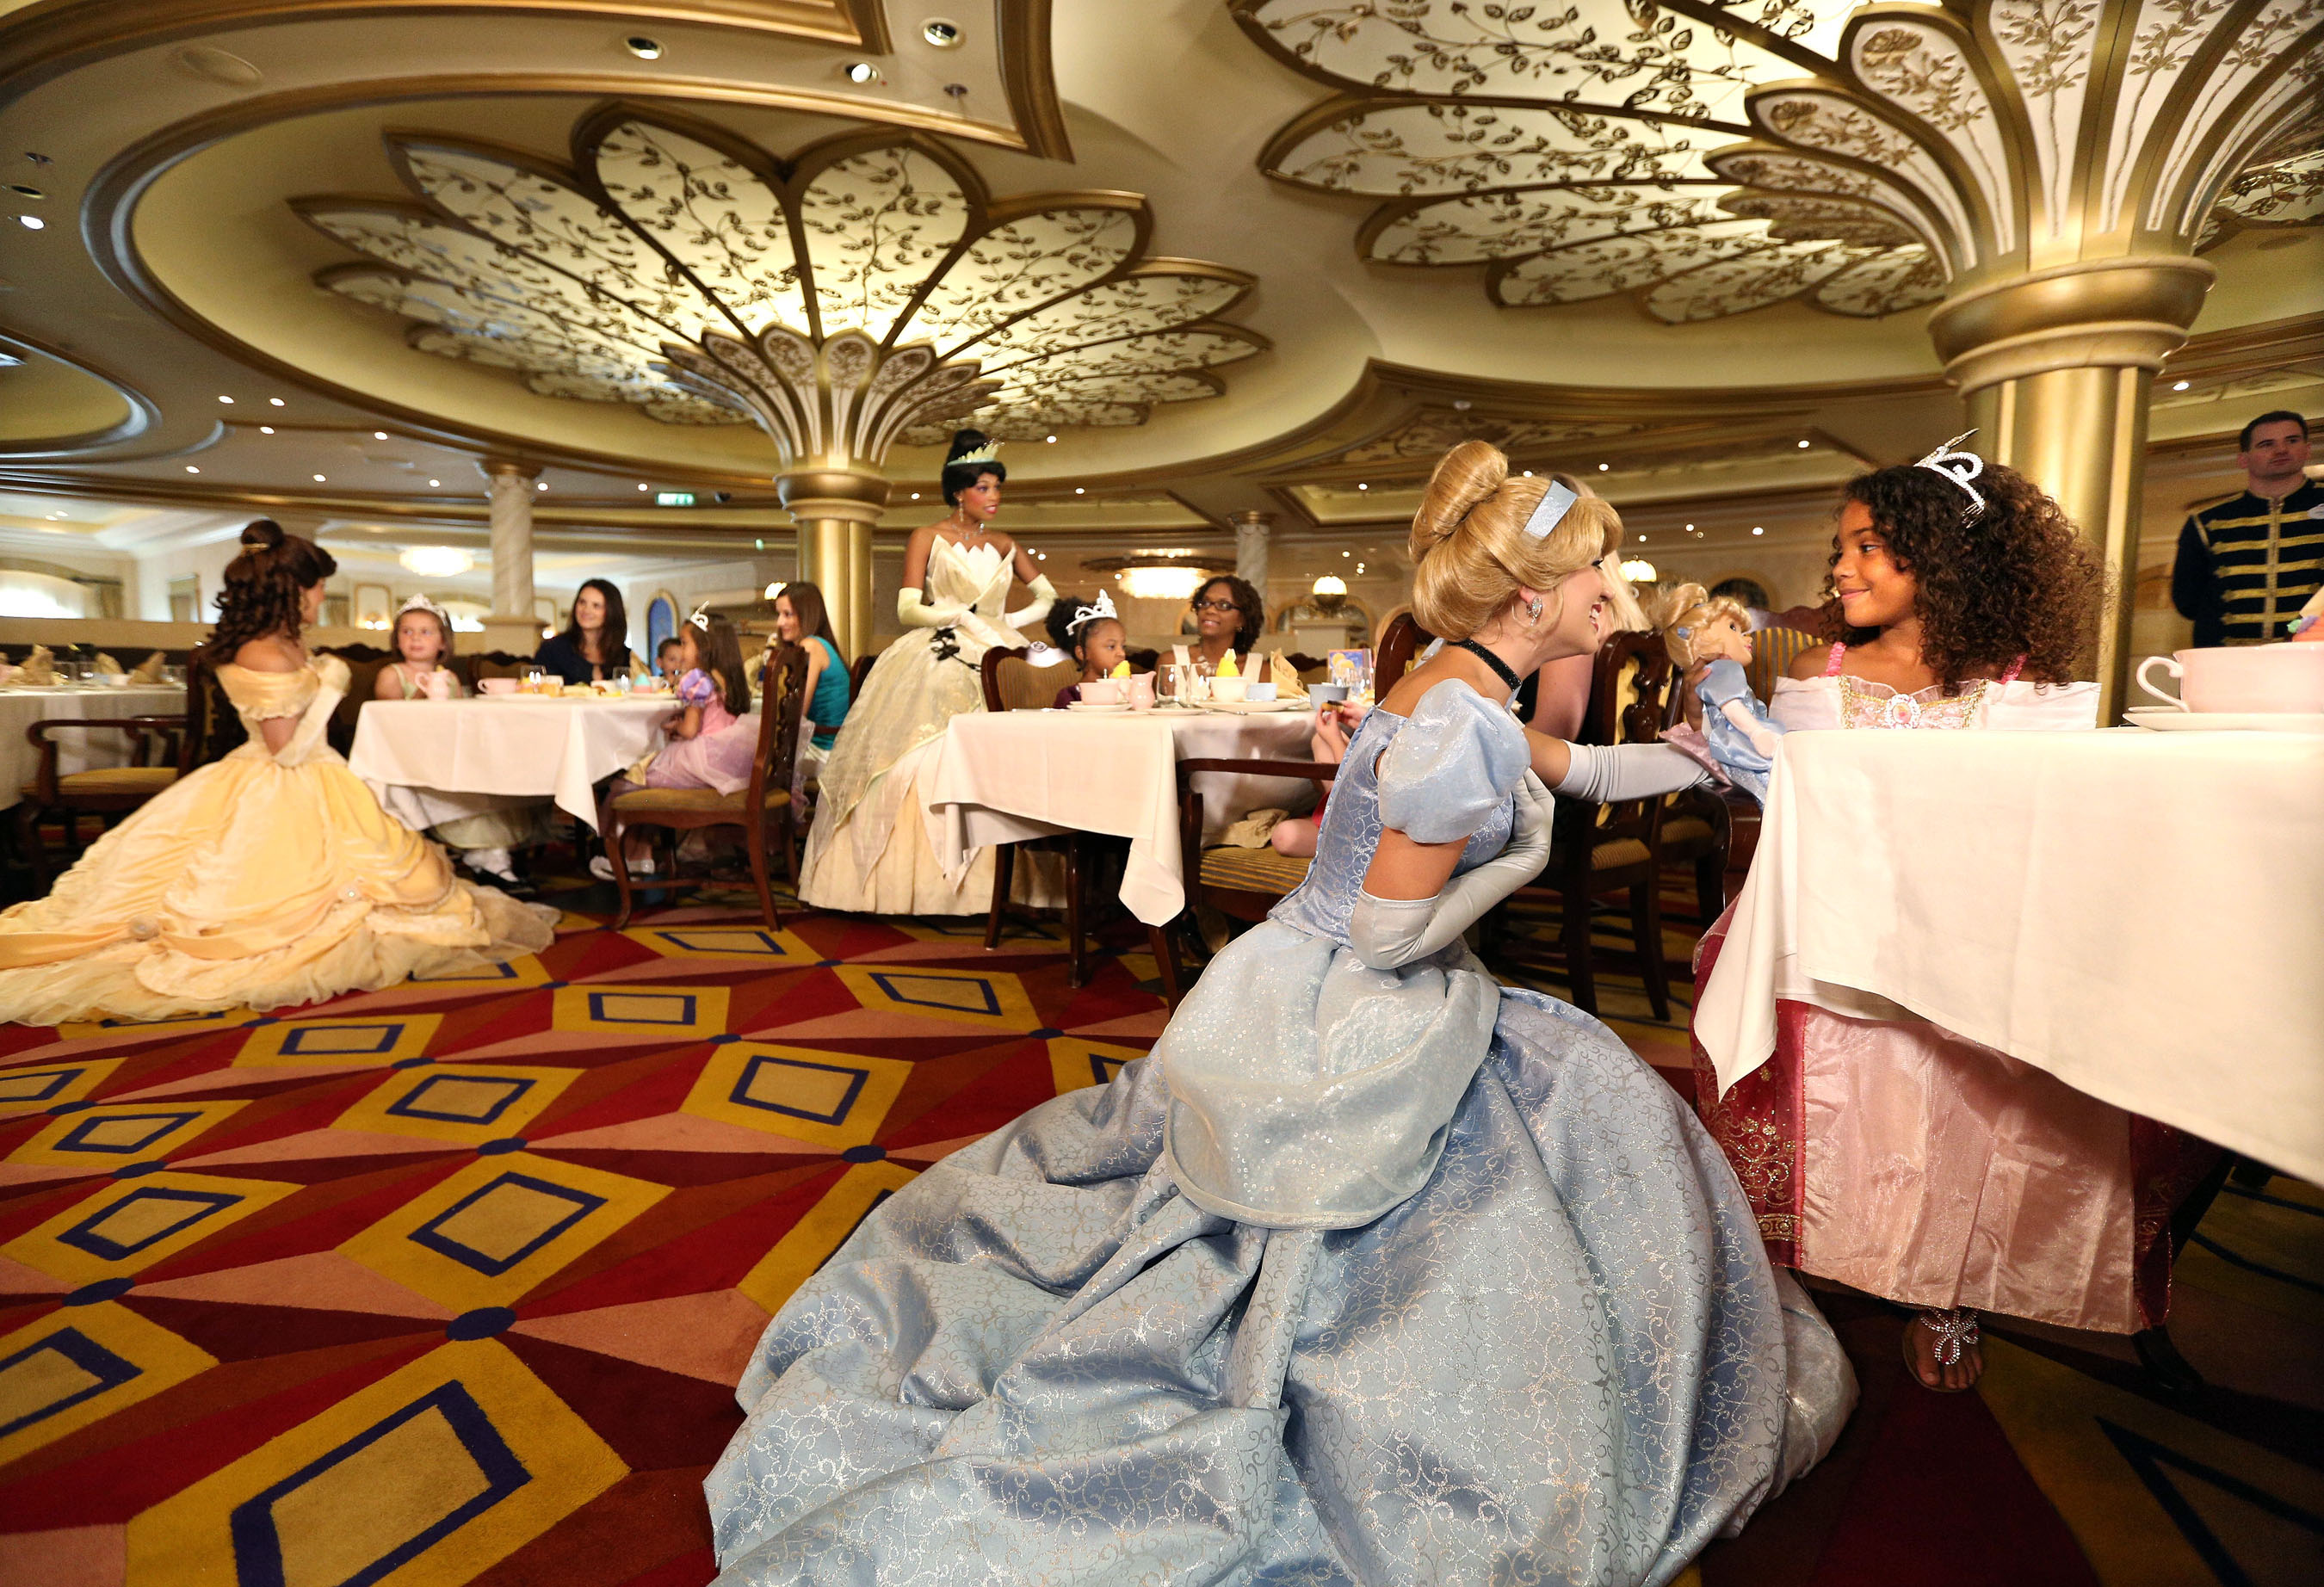 Meet the princesses on Disney